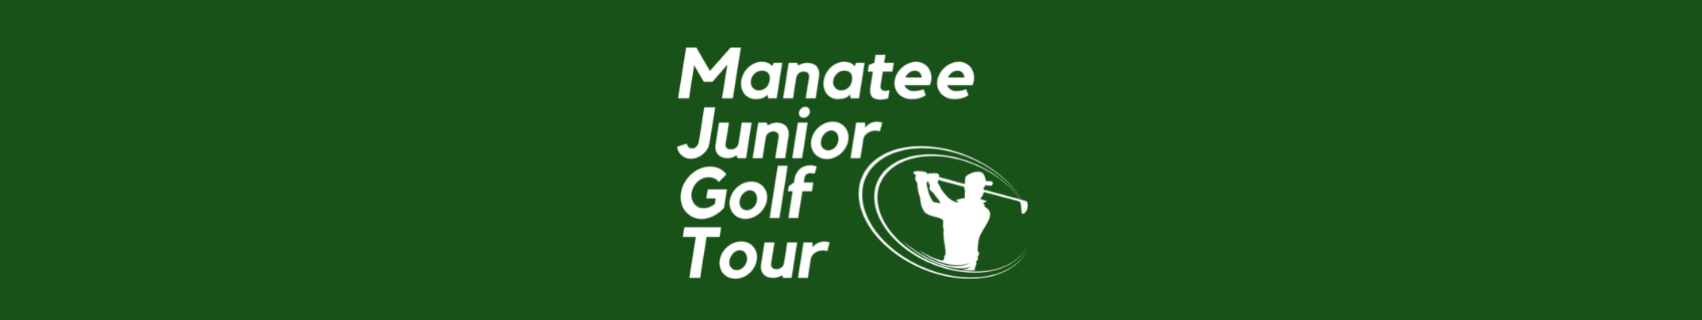 Manatee Junior Golf Tour